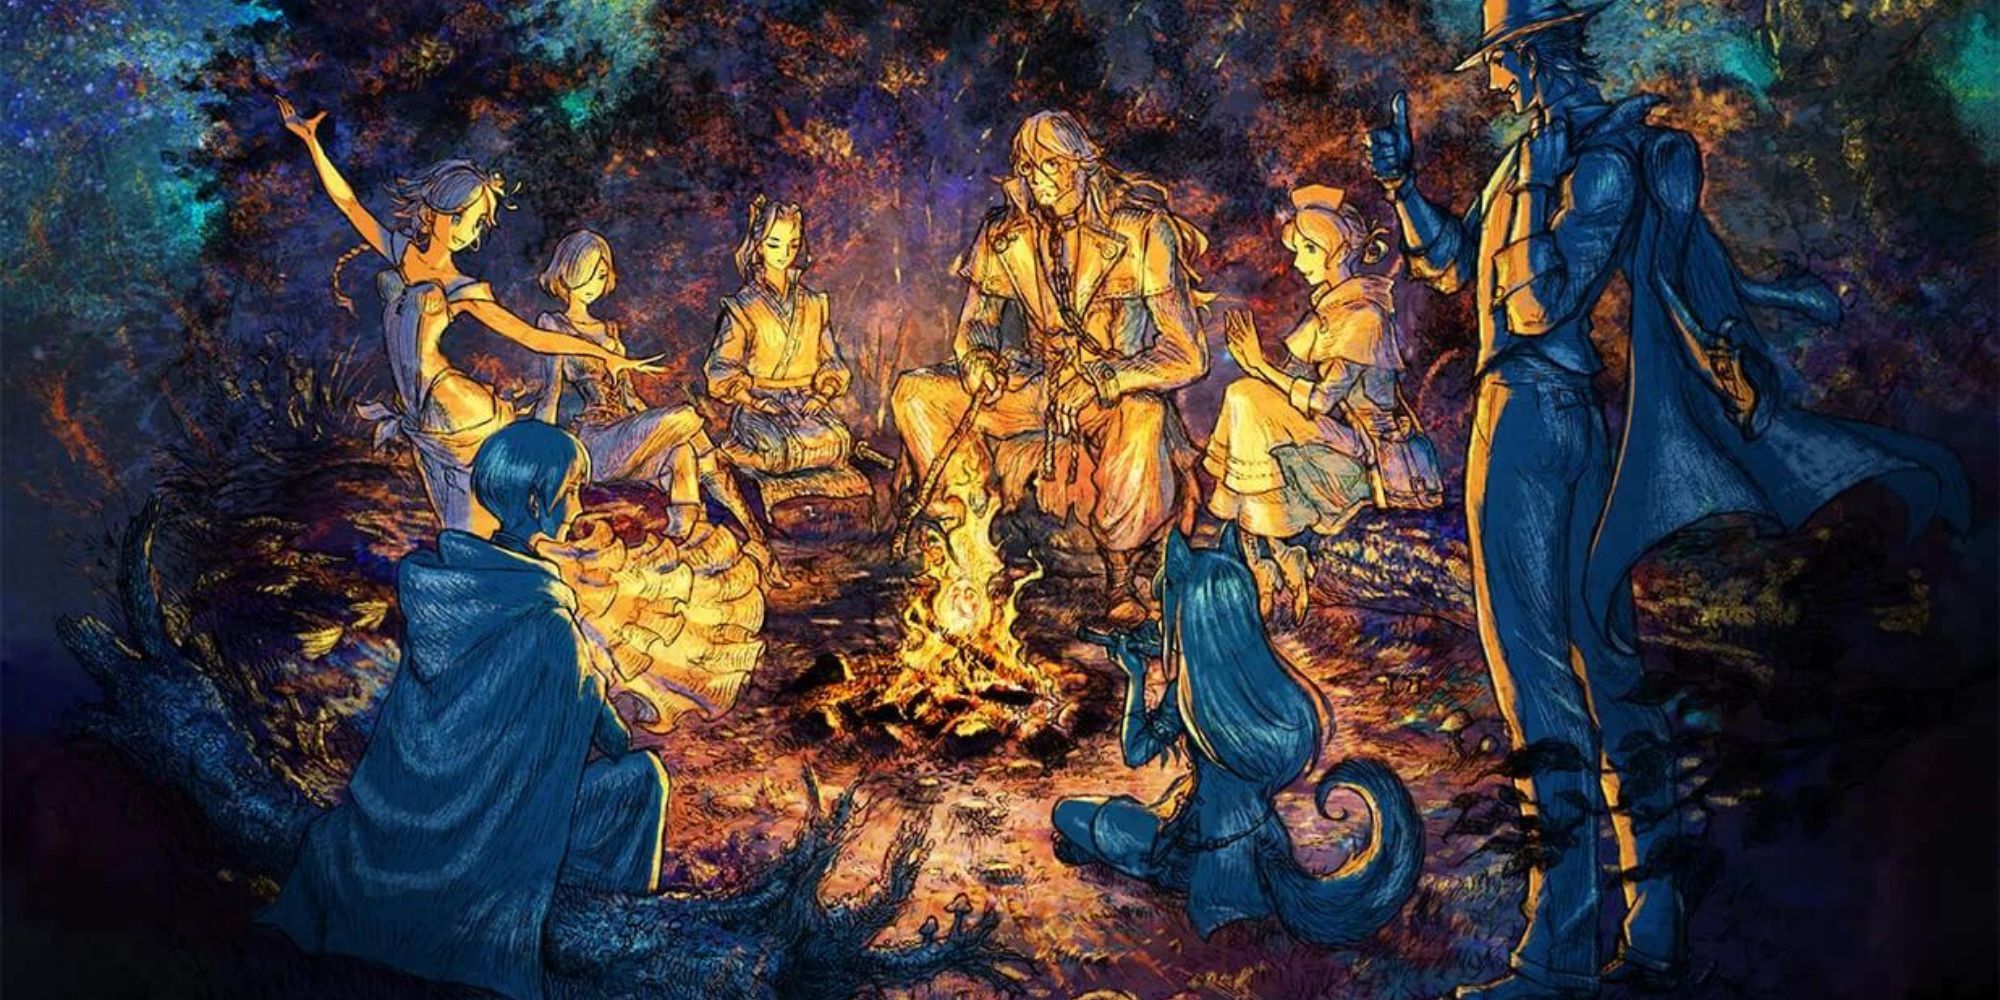 Agnea, Temenos, Hikari, Osvald, Throne, Ochette, Castti, and Portitio gather around a campfire together